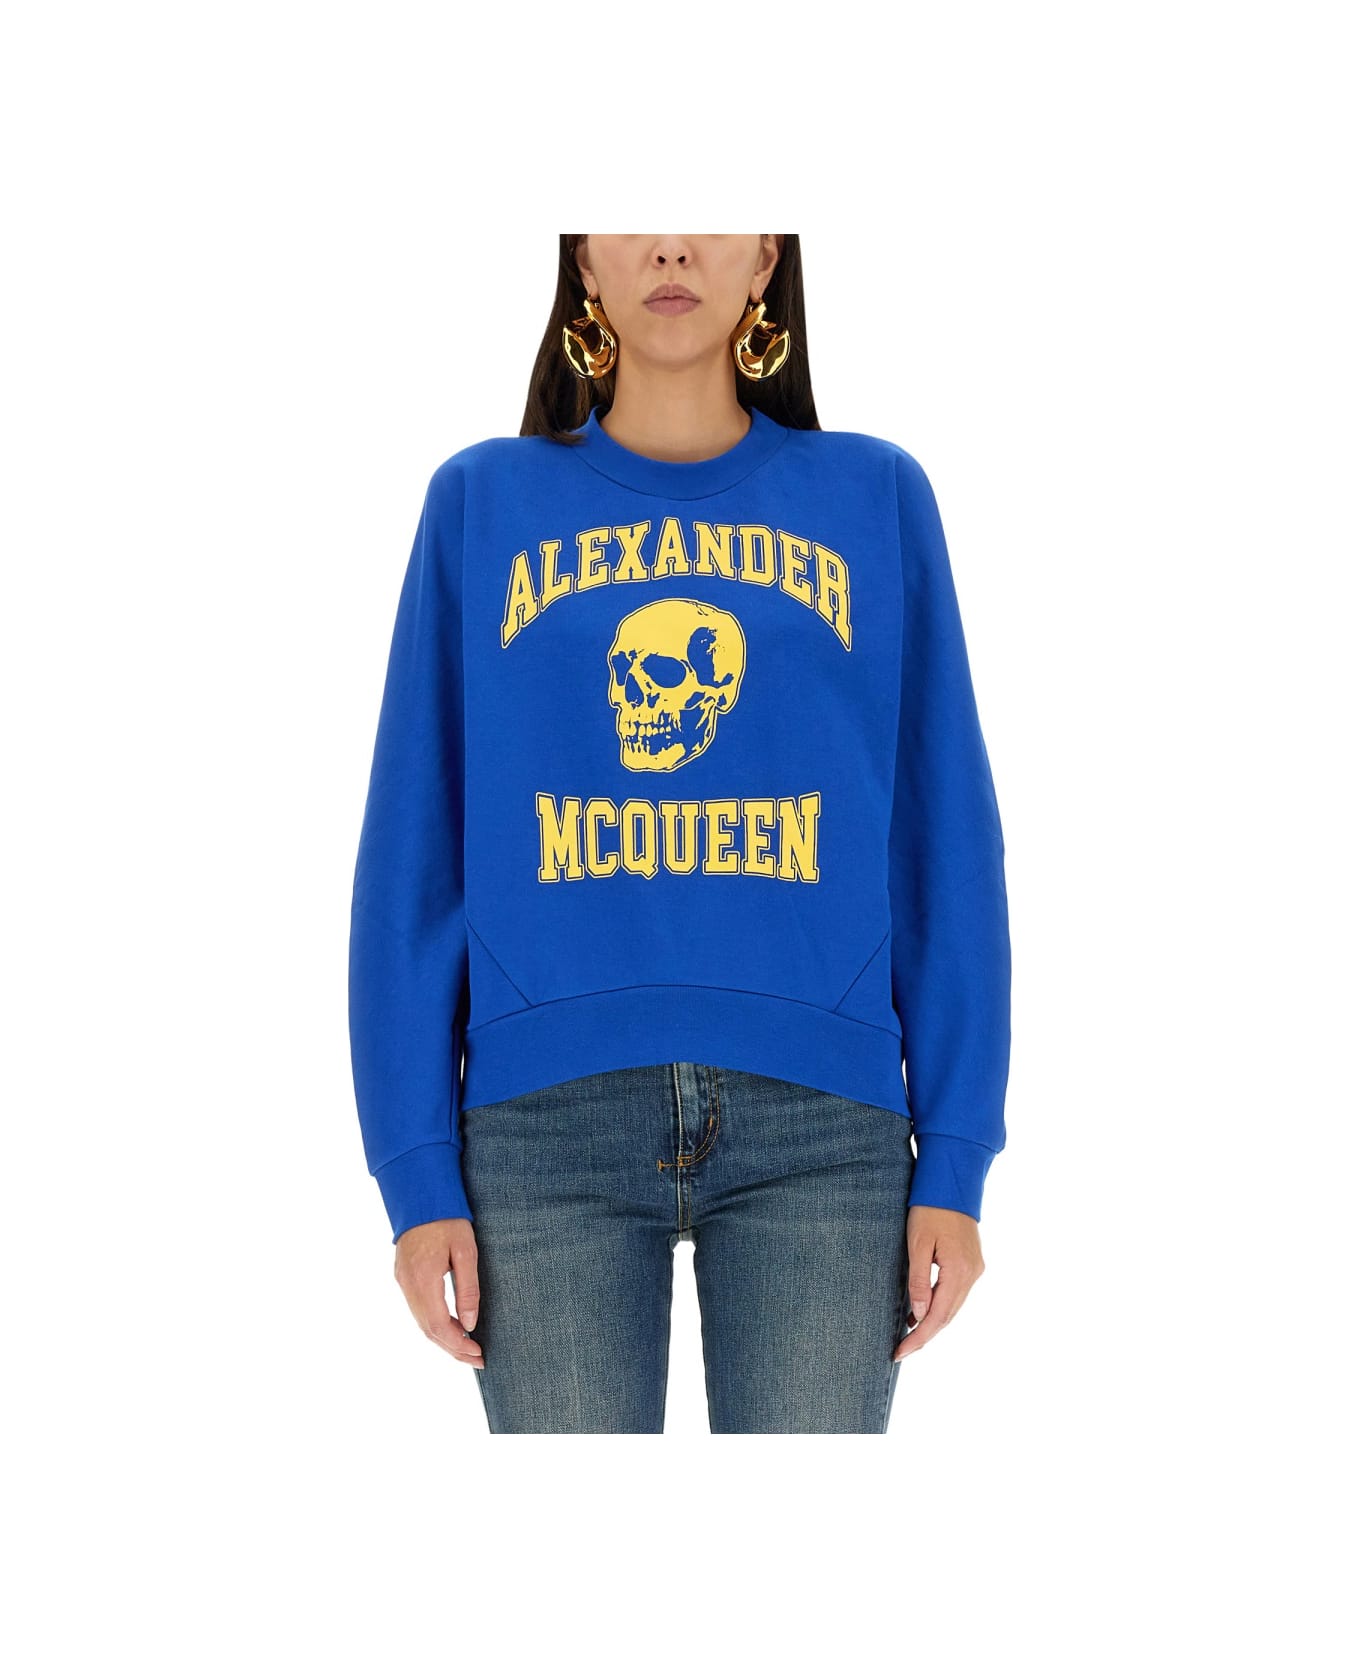 Alexander McQueen Varsiity Skull Sweatshirt - BLUE